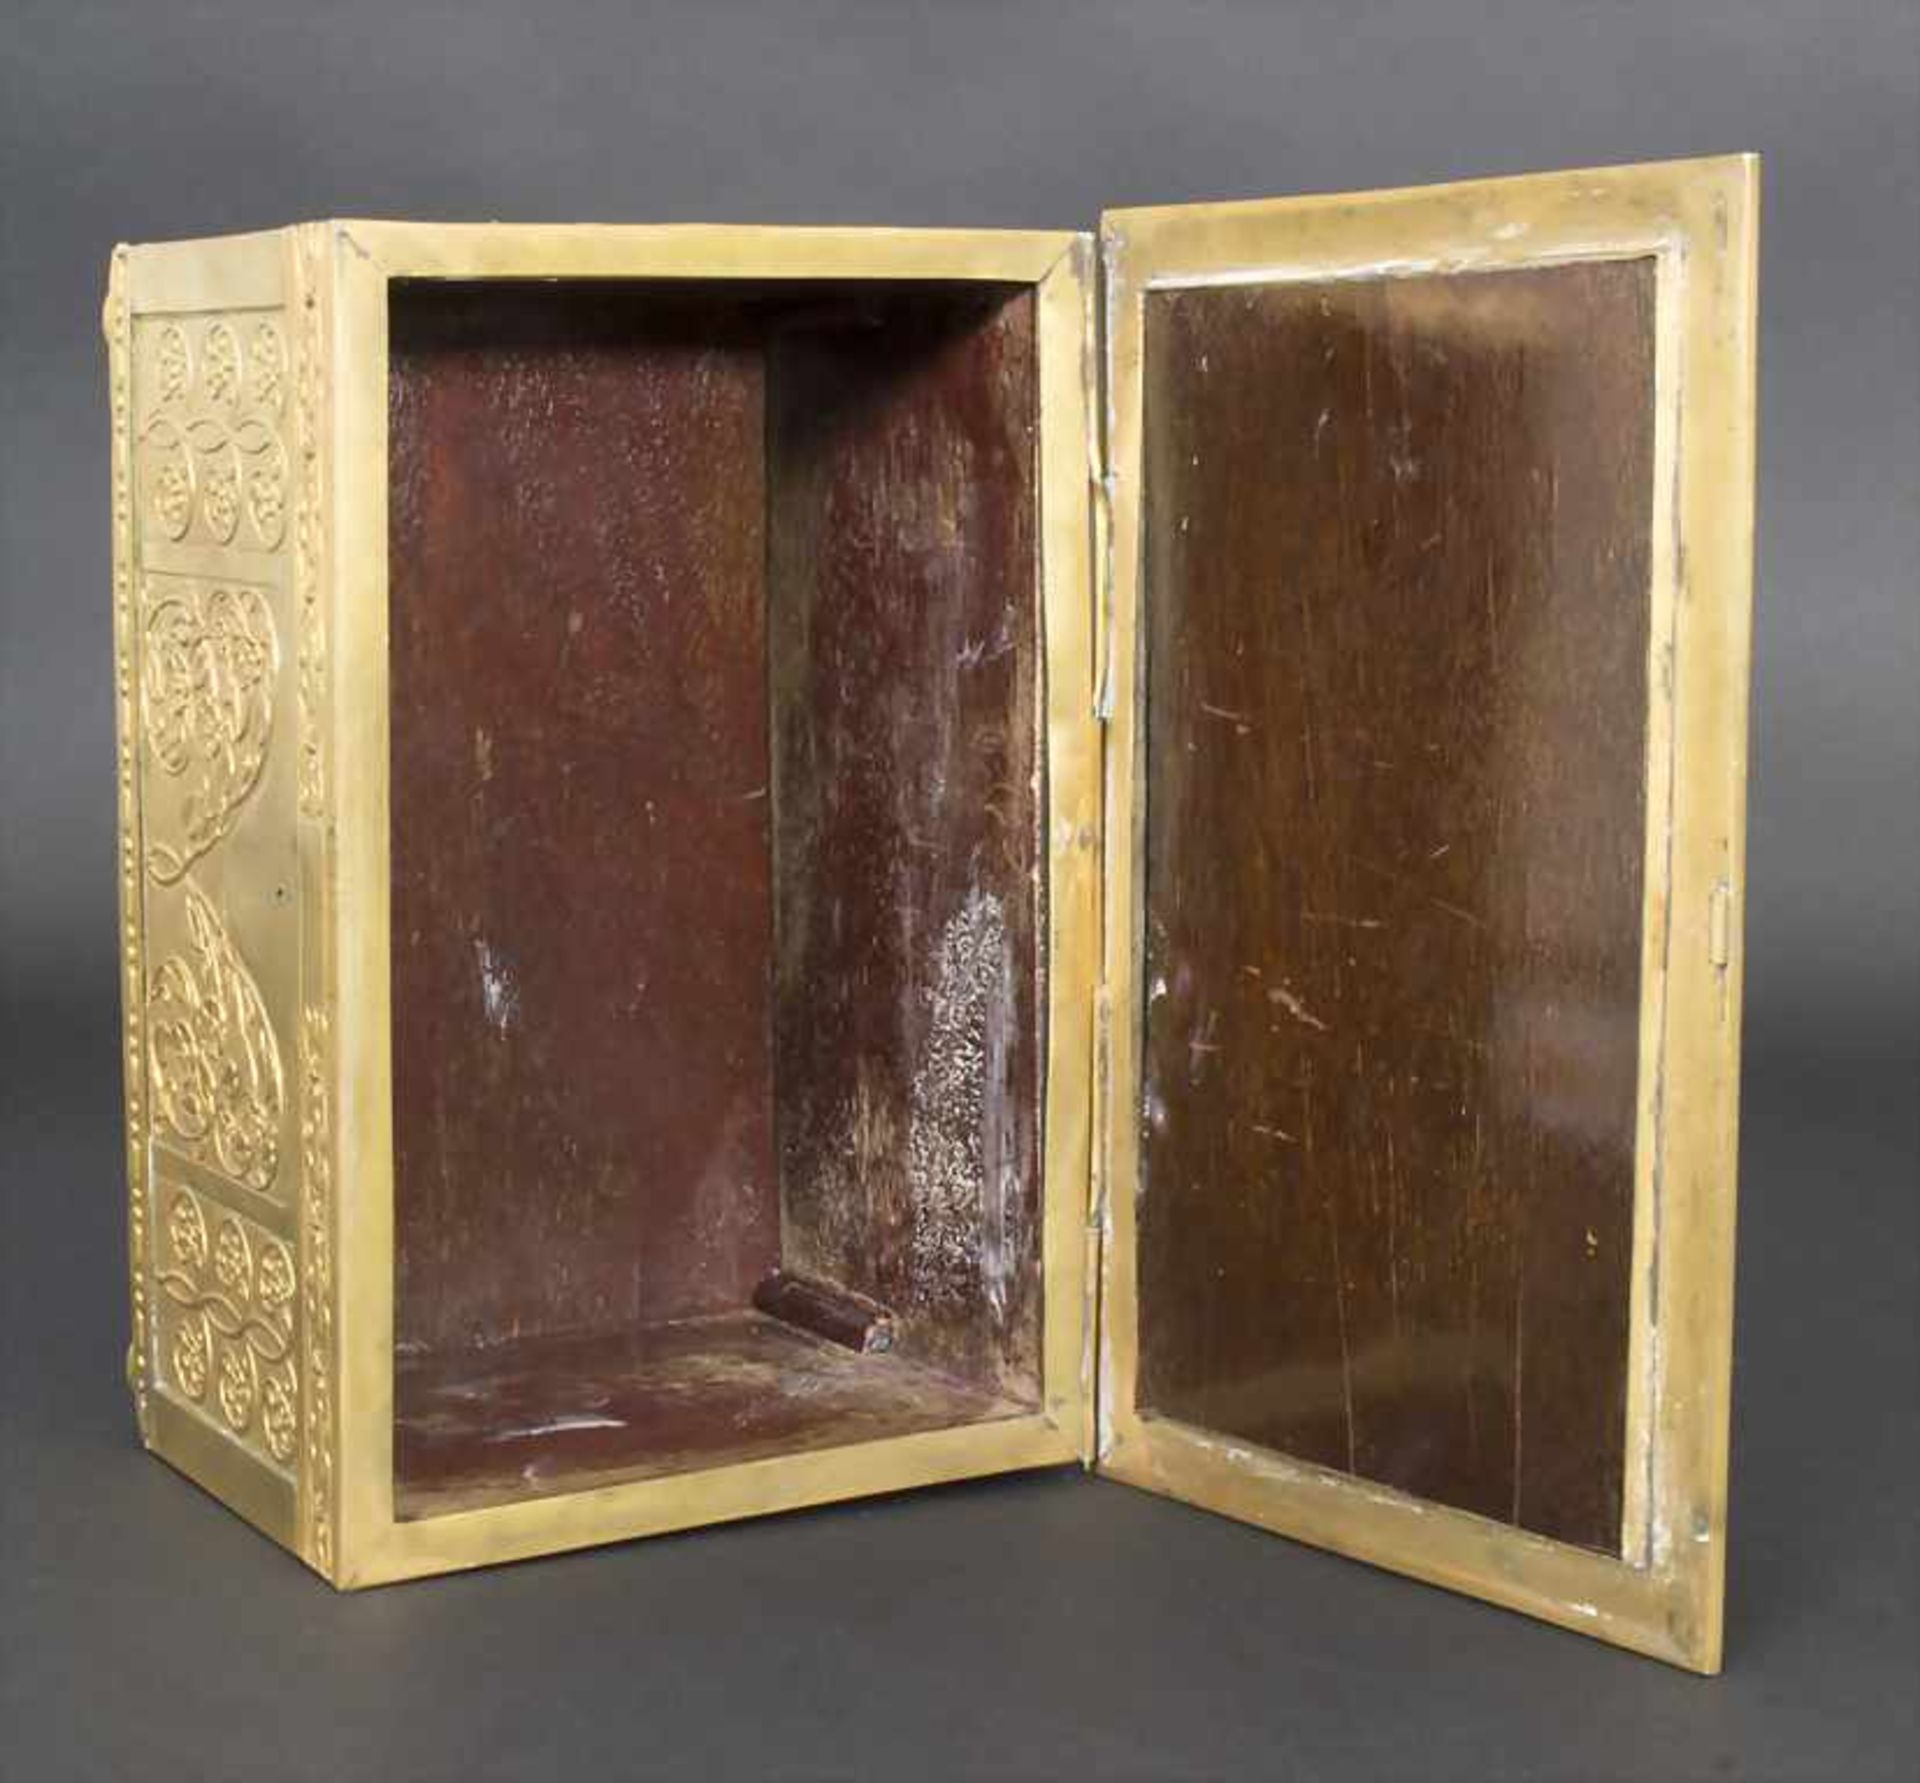 Jugendstil Schmuckschatulle / An Art Nouveau jewellery box, Entwurf wohl Künstlerkolonie - Bild 5 aus 7